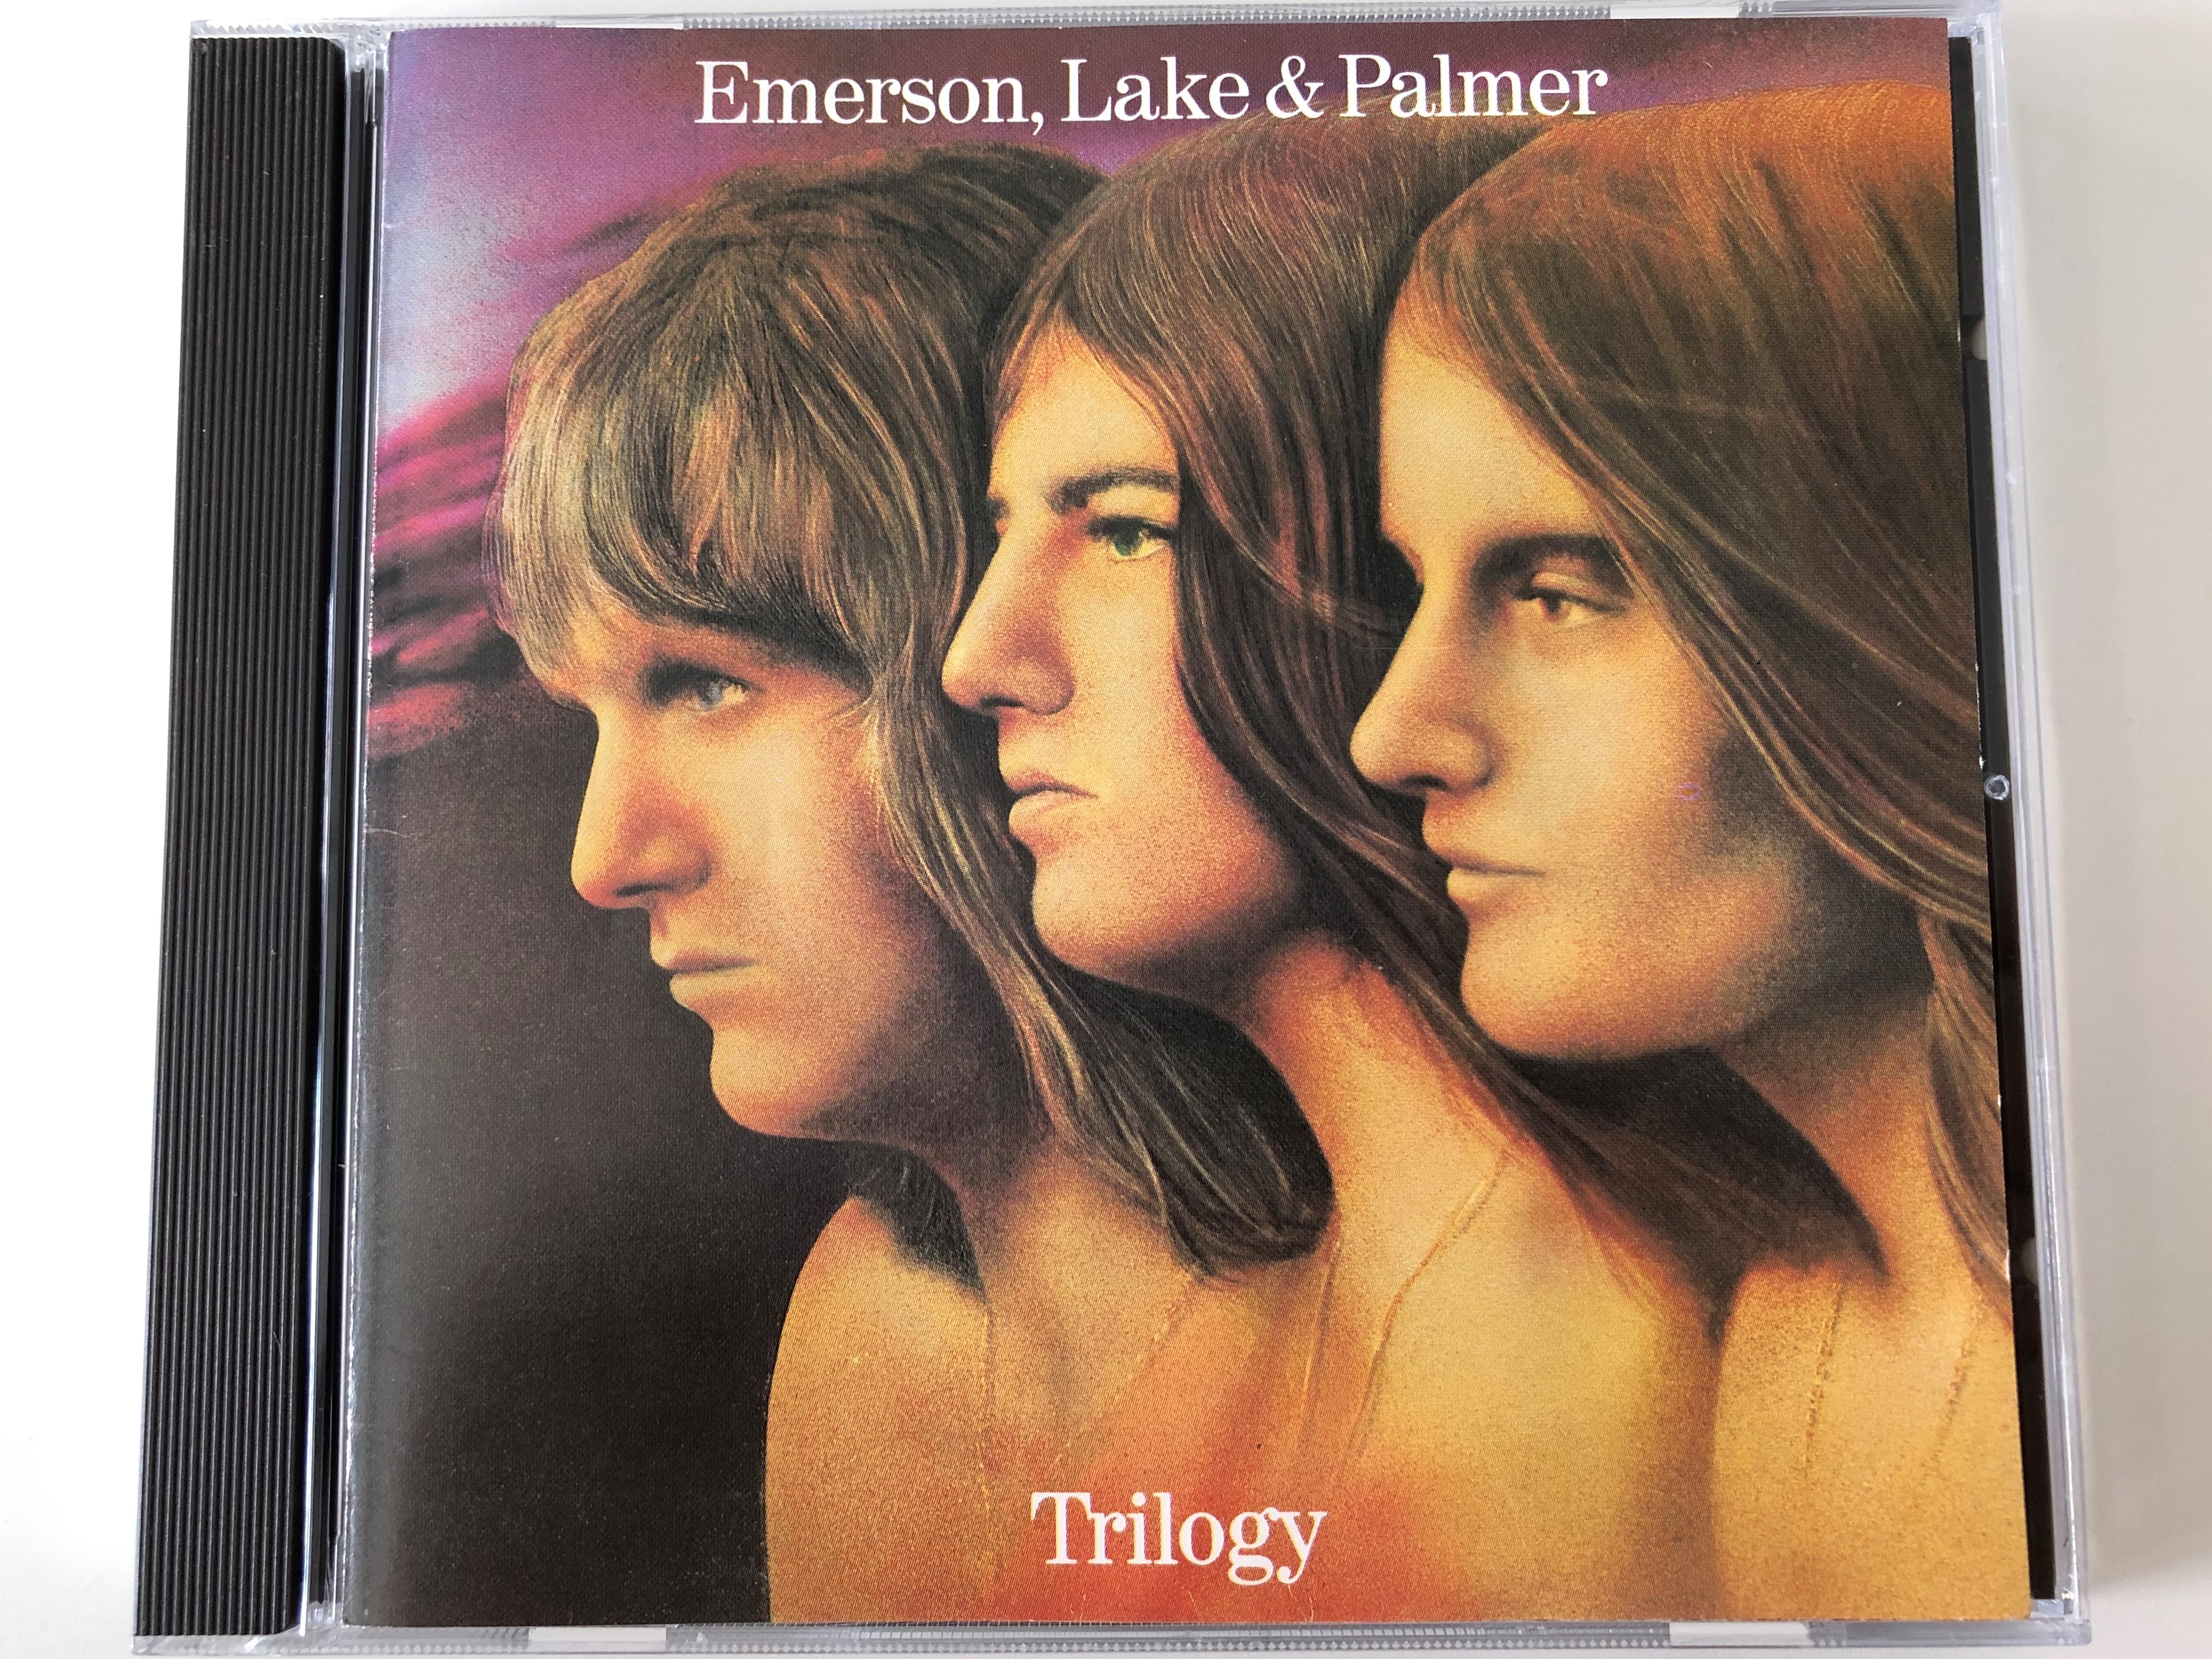 emerson-lake-palmer-trilogy-manticore-audio-cd-stereo-258-173-222-1-.jpg